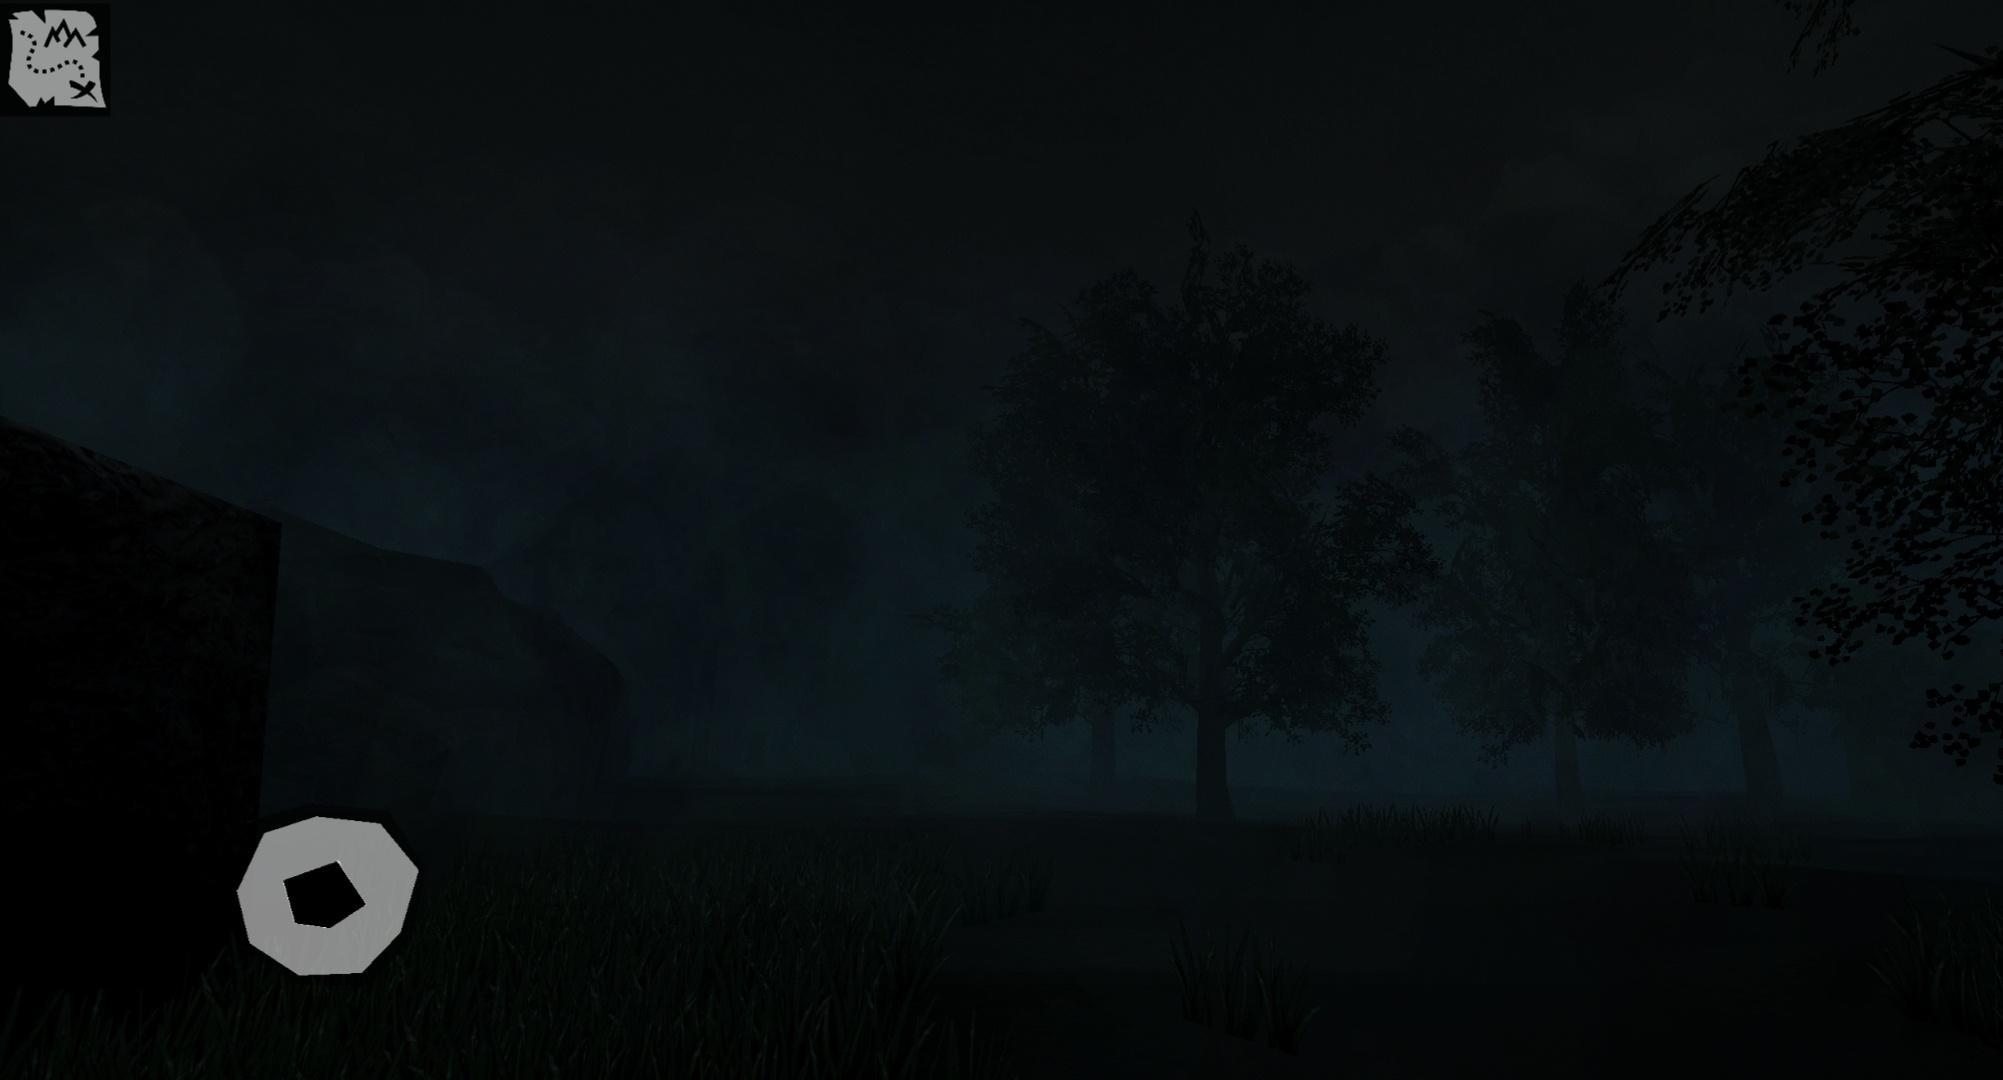 Screenshot 1 of បន្ទាប់ពីងងឹត - apocalypse zombie 